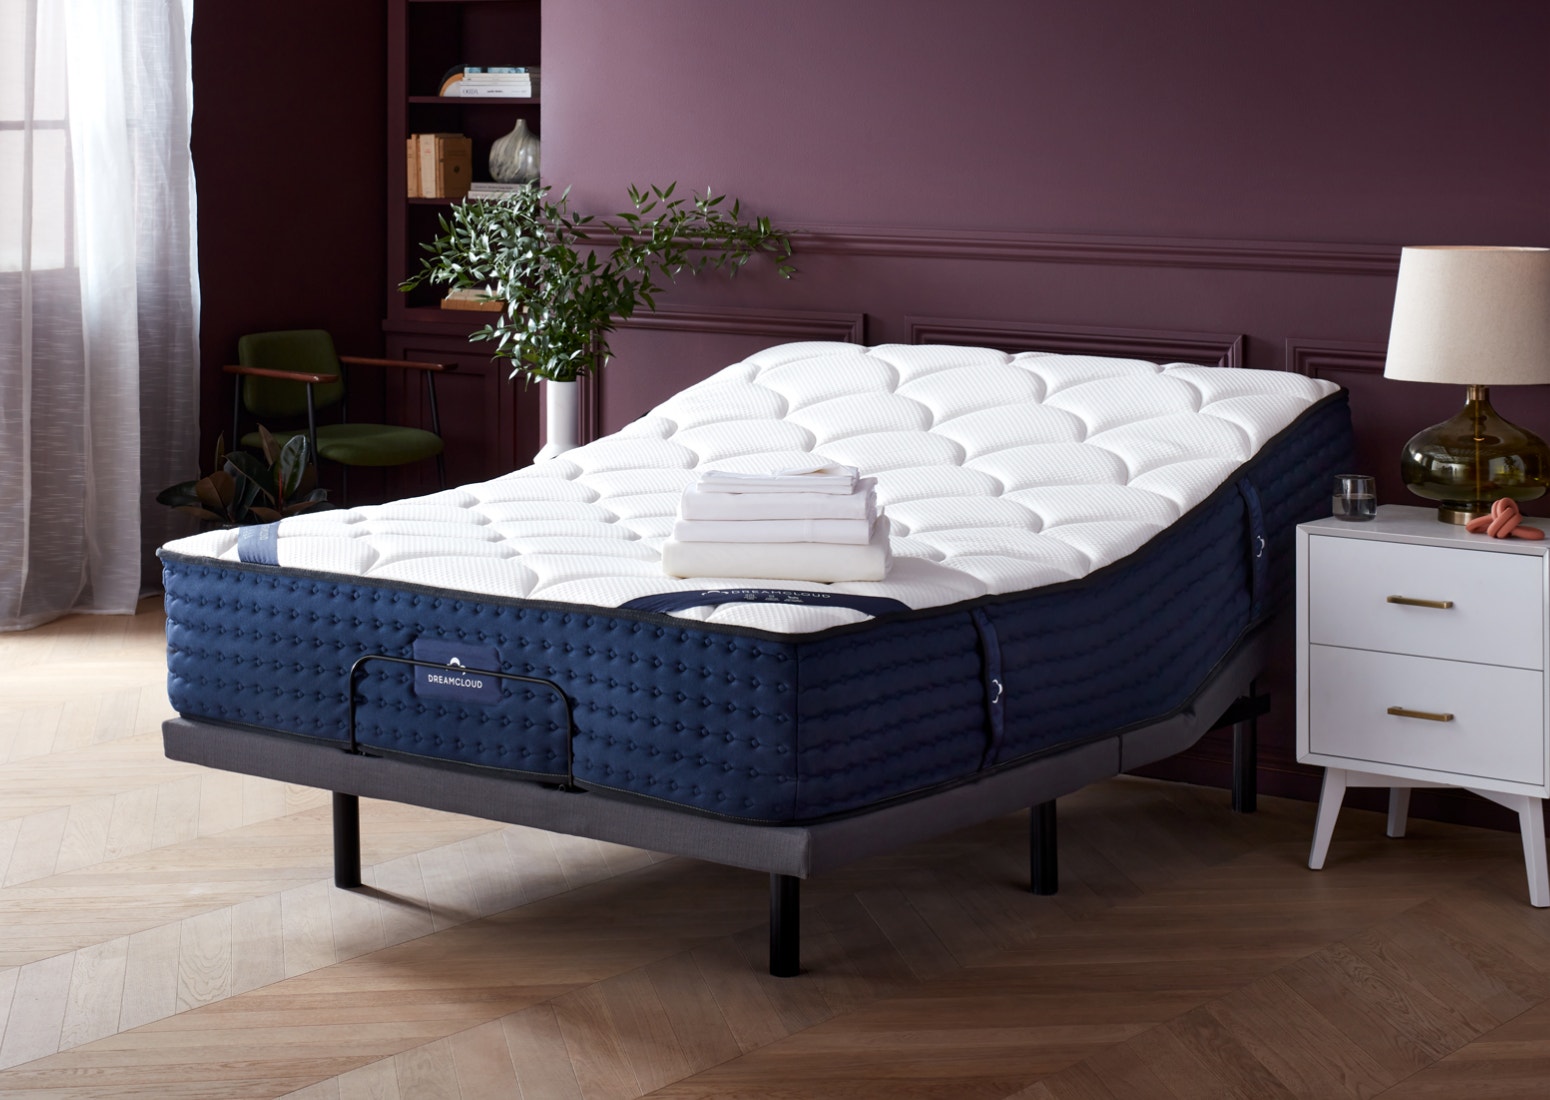 Queen Size Adjustable Bed Frames, Adjustable Bed Frame Queen Size